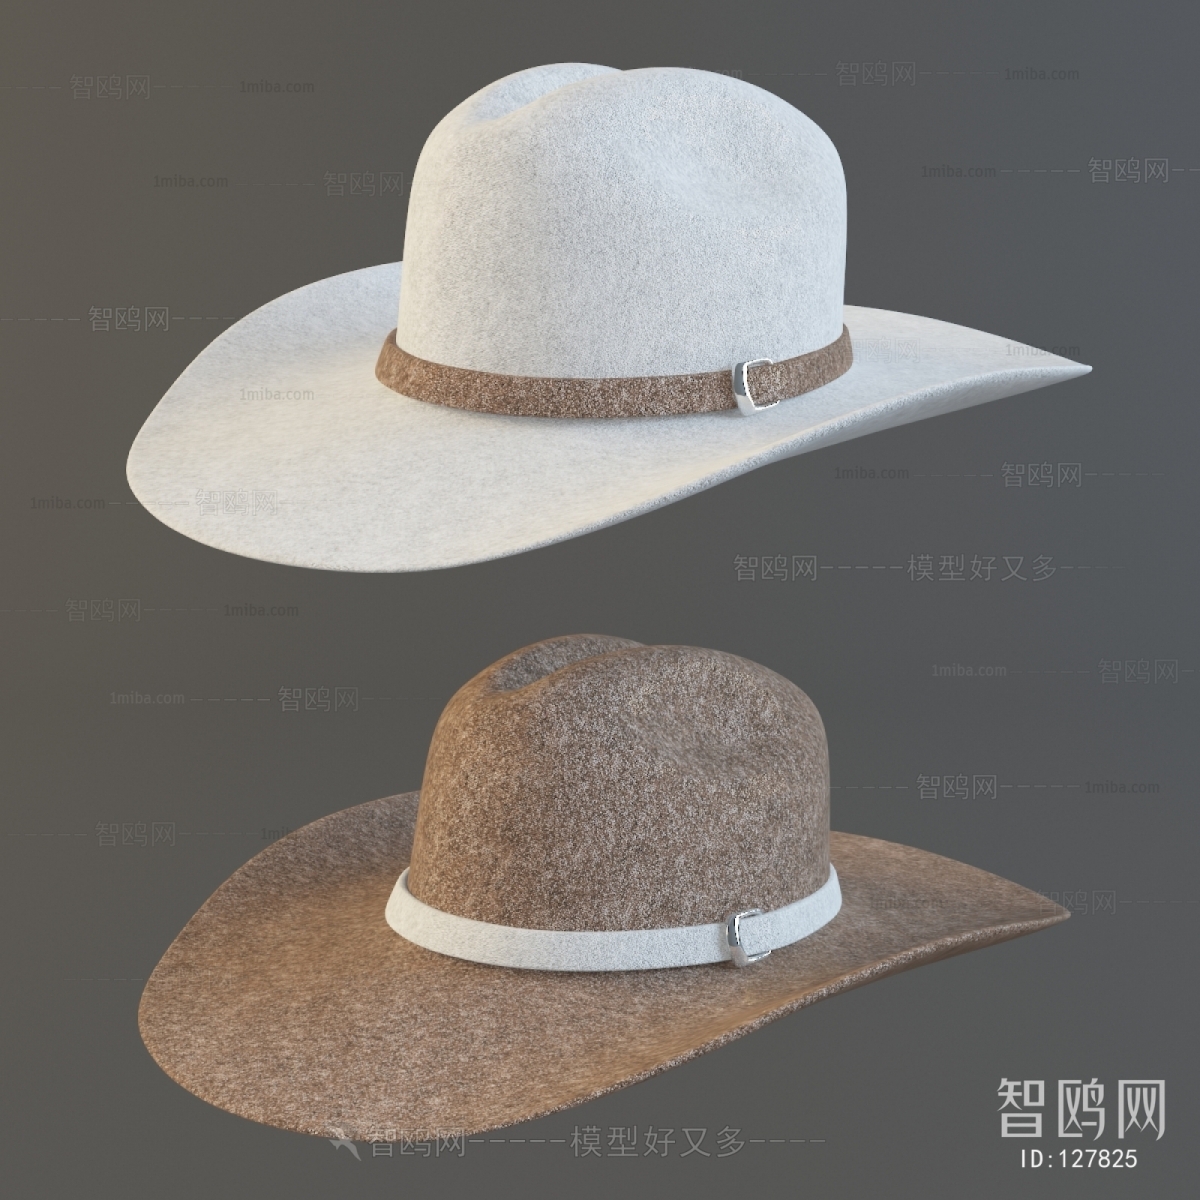 European Style Hat